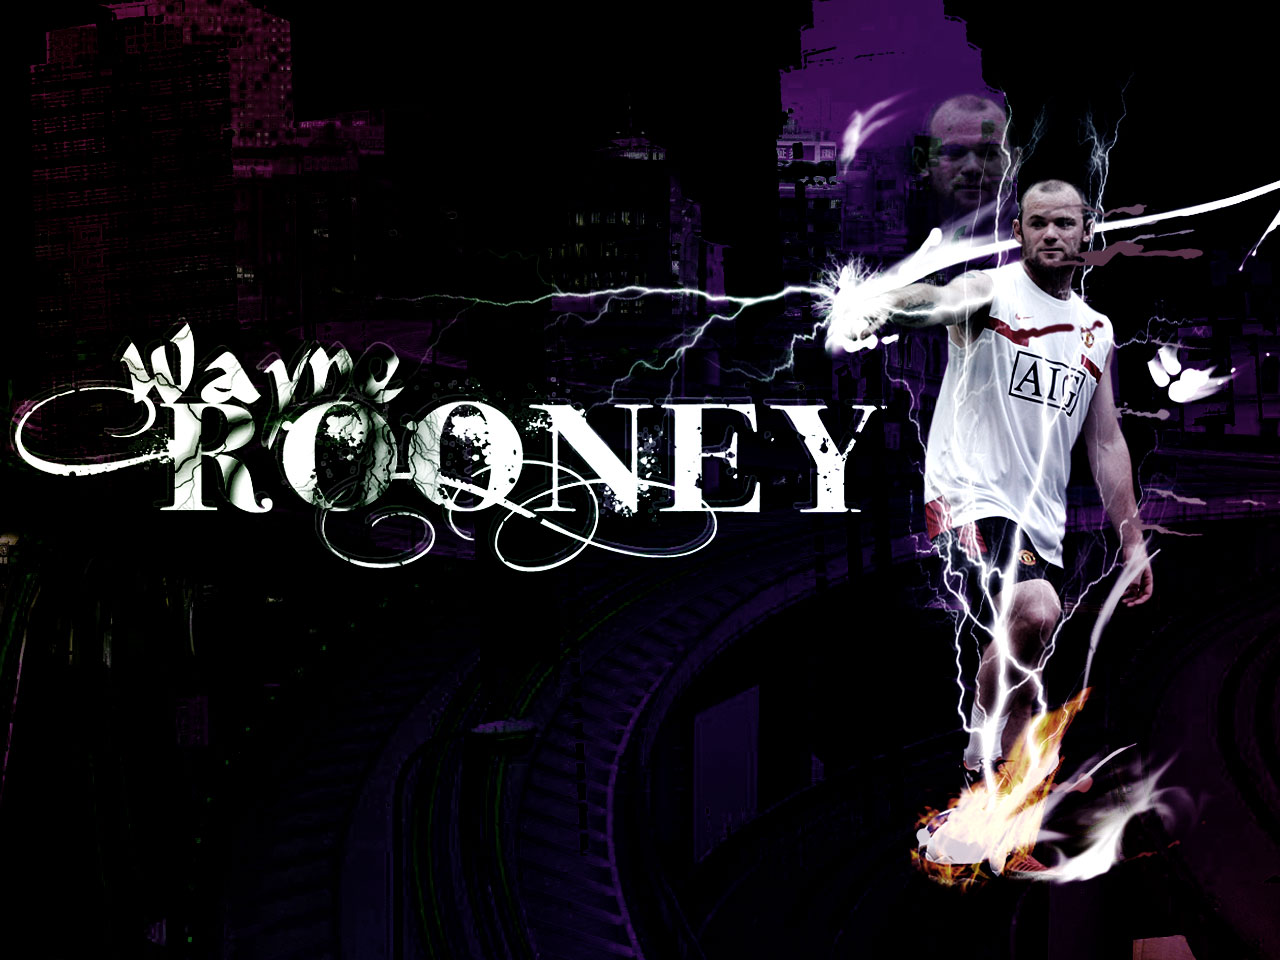 ALL FOOTBALL STARS Wayne Rooney Wallpapers 1280x960